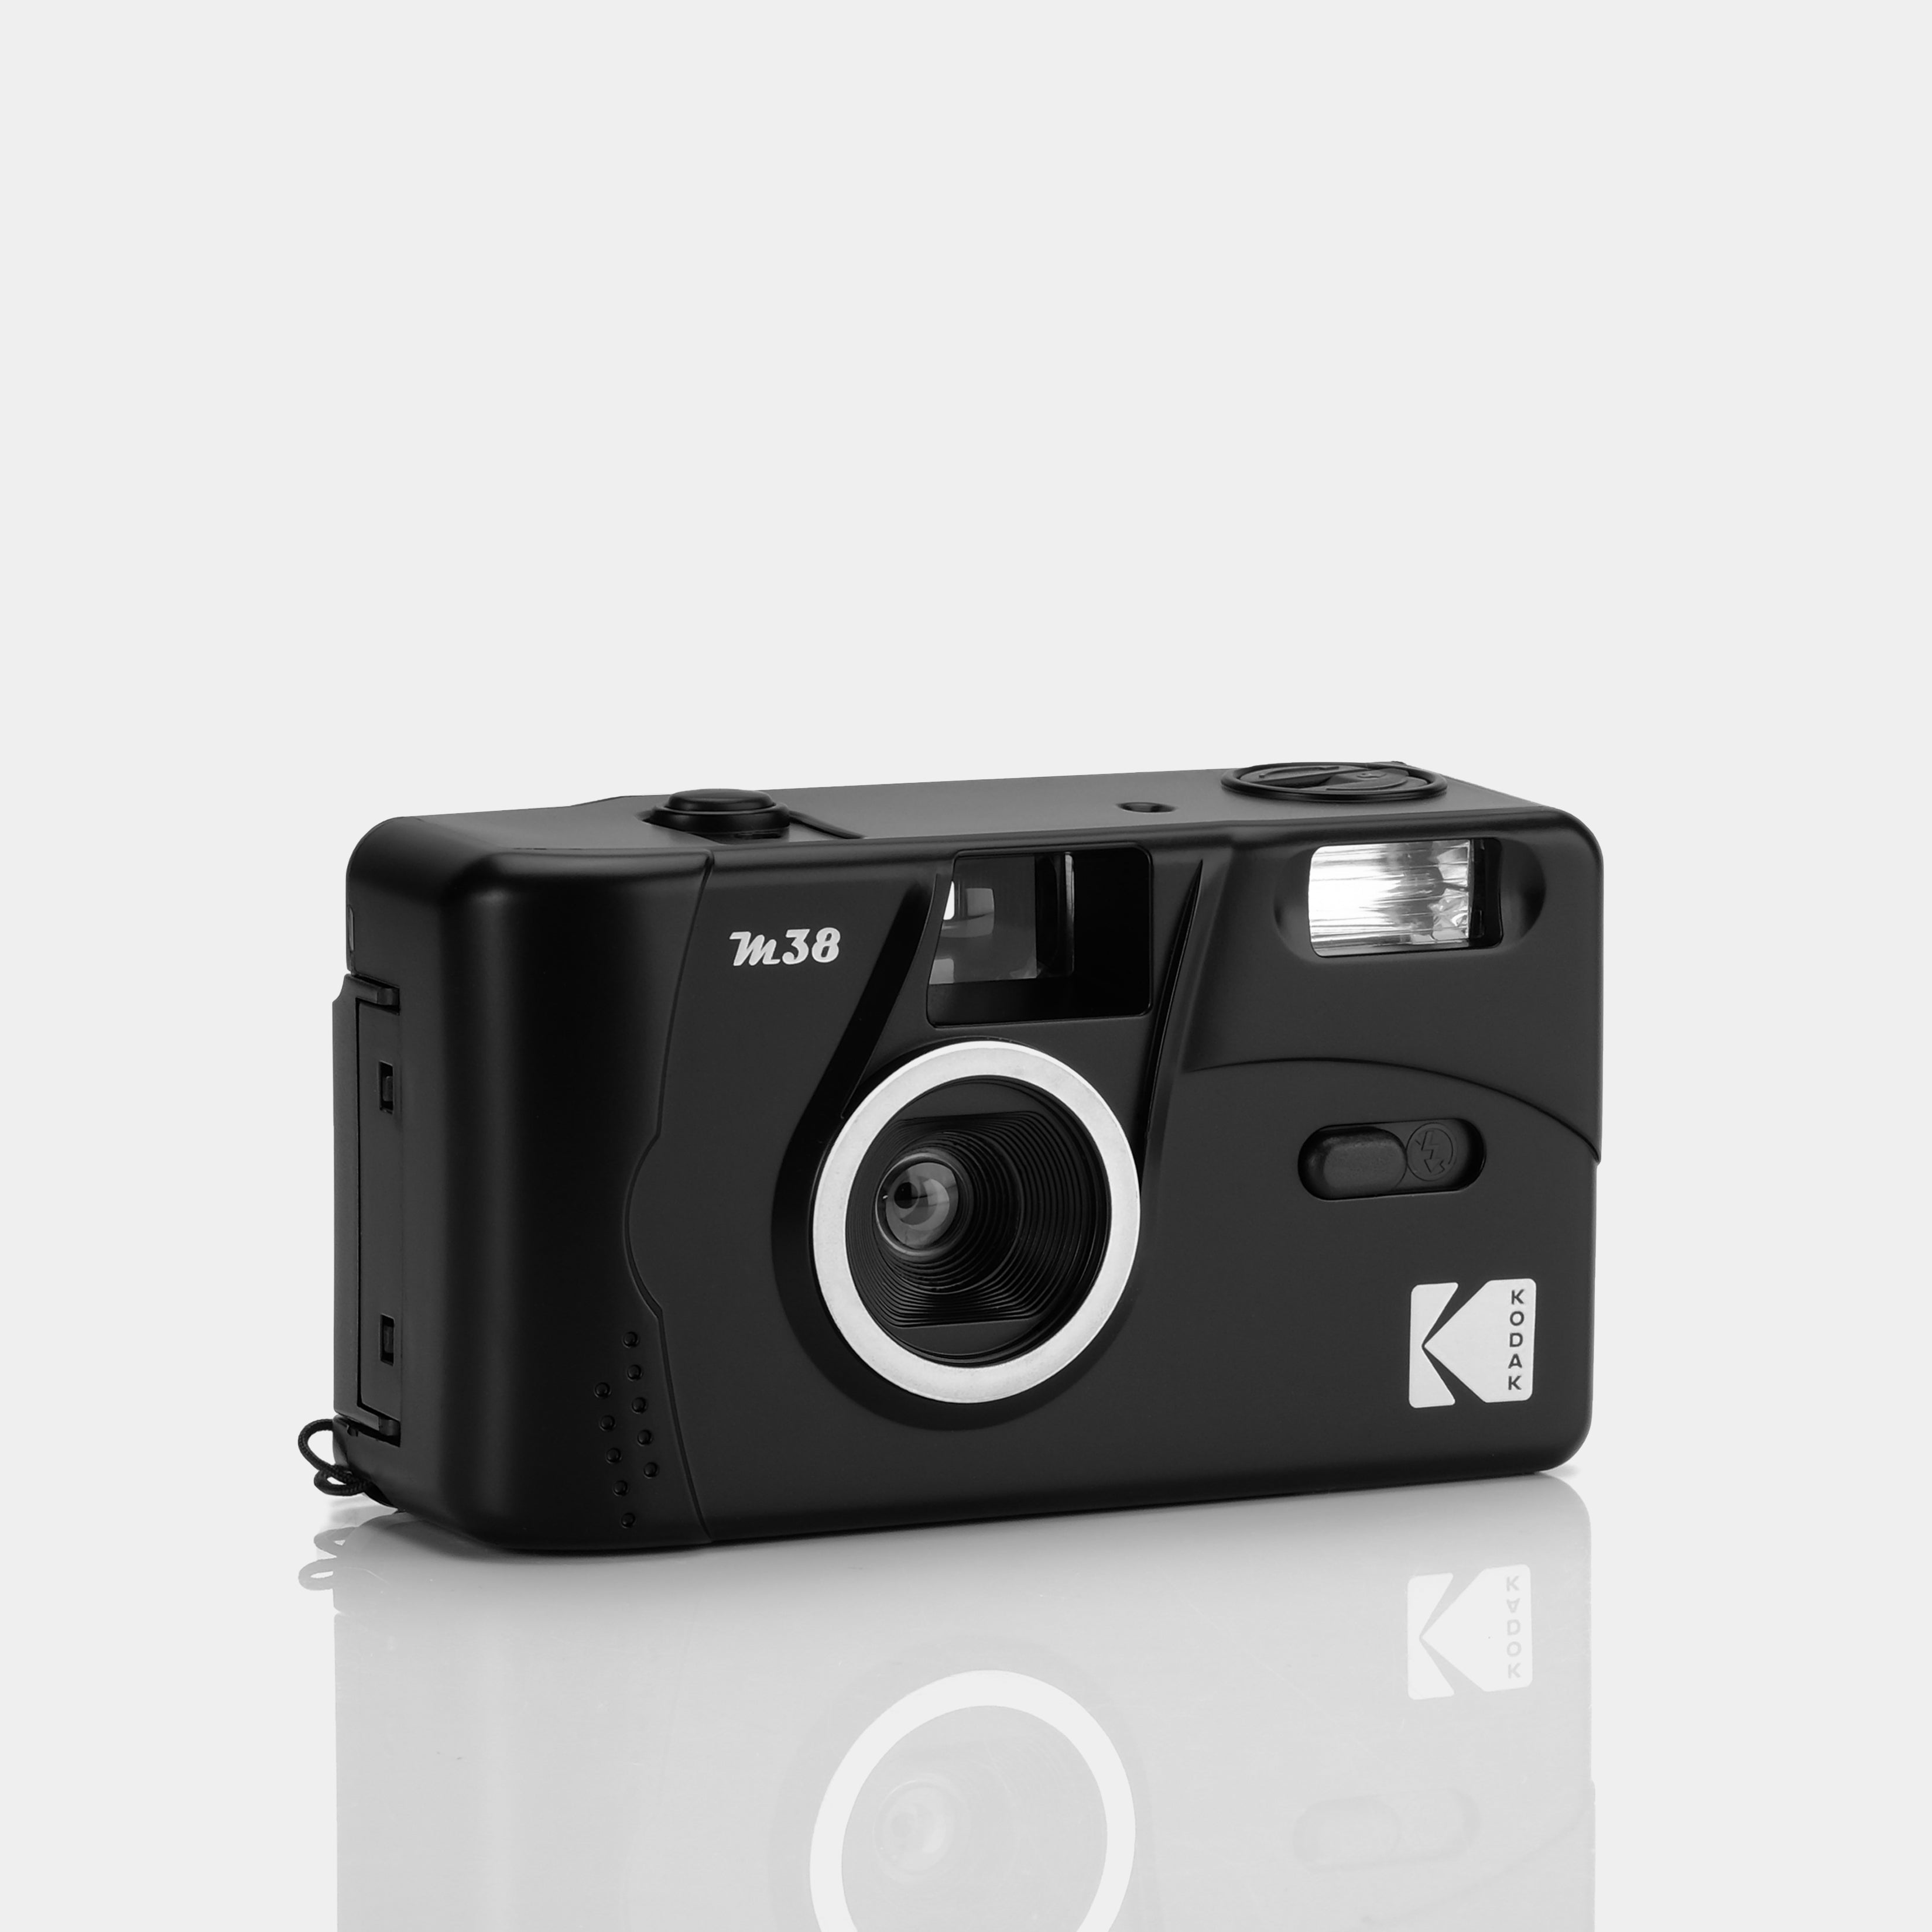 Kodak M38 Reusable 35mm Point and Shoot Black Compact Film Camera